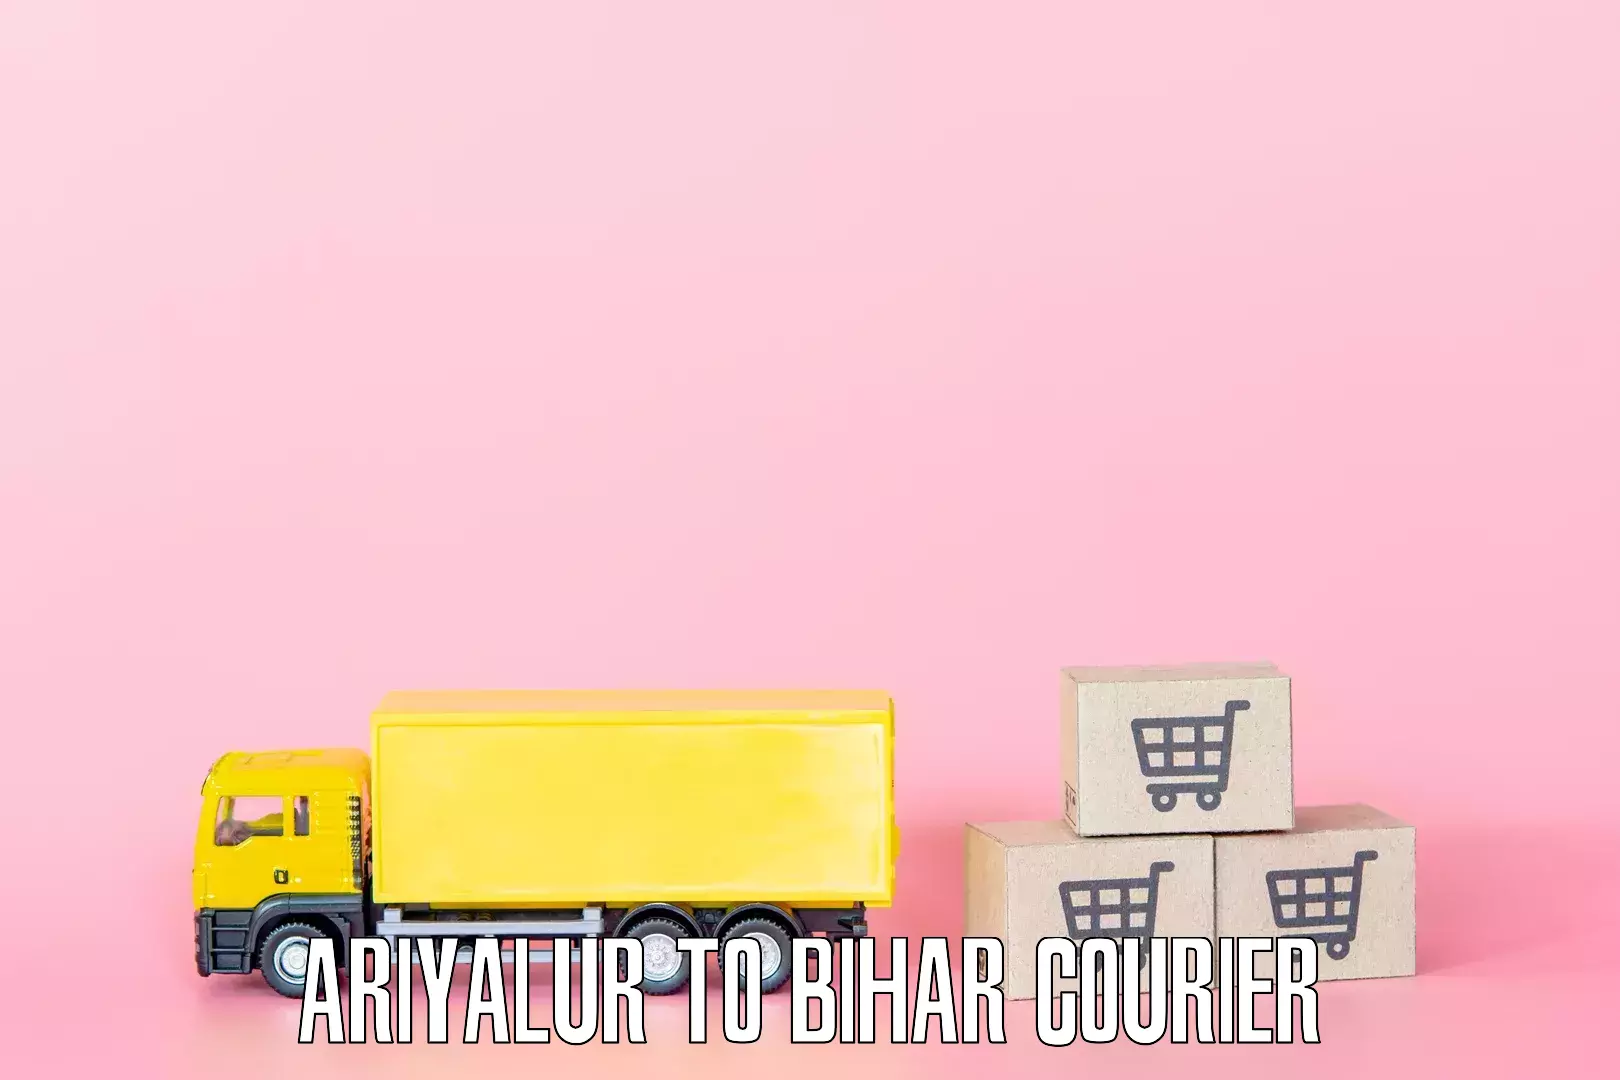 Efficient moving company Ariyalur to Bihar